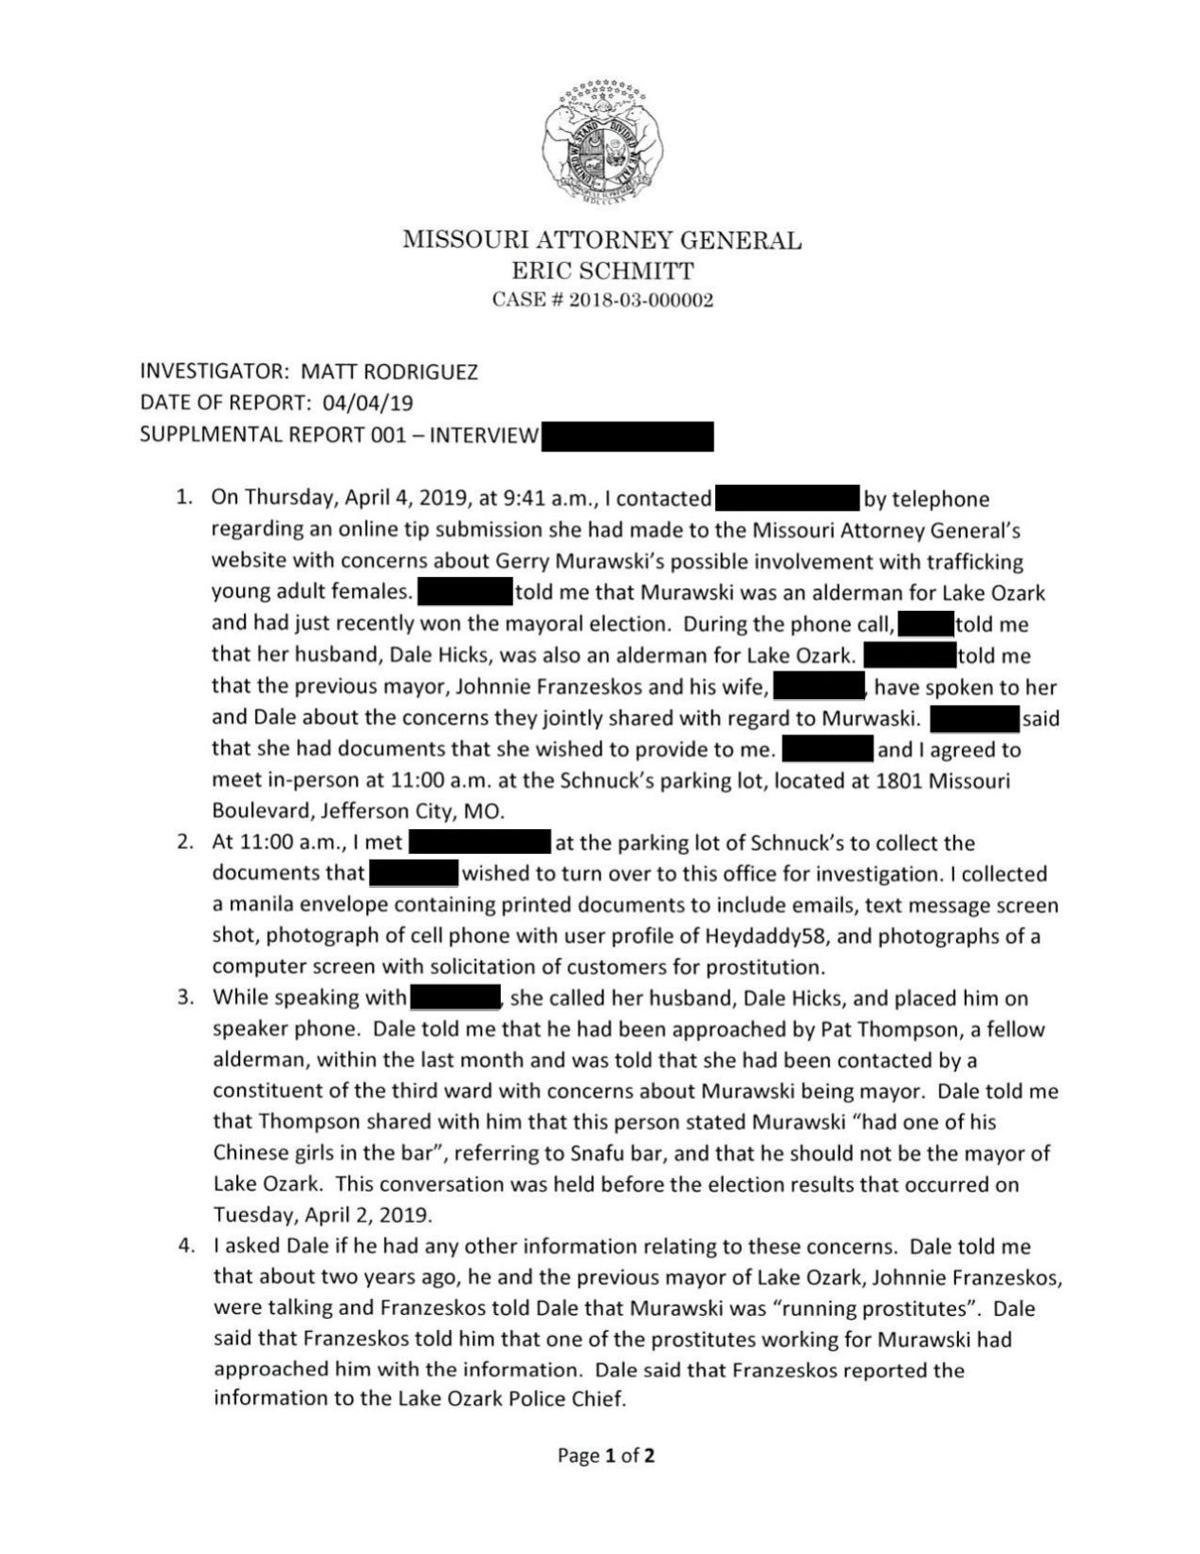 Murawski Investigation Doc 1-1 - Matt Rodriguez Supplemental Report & FBI Report